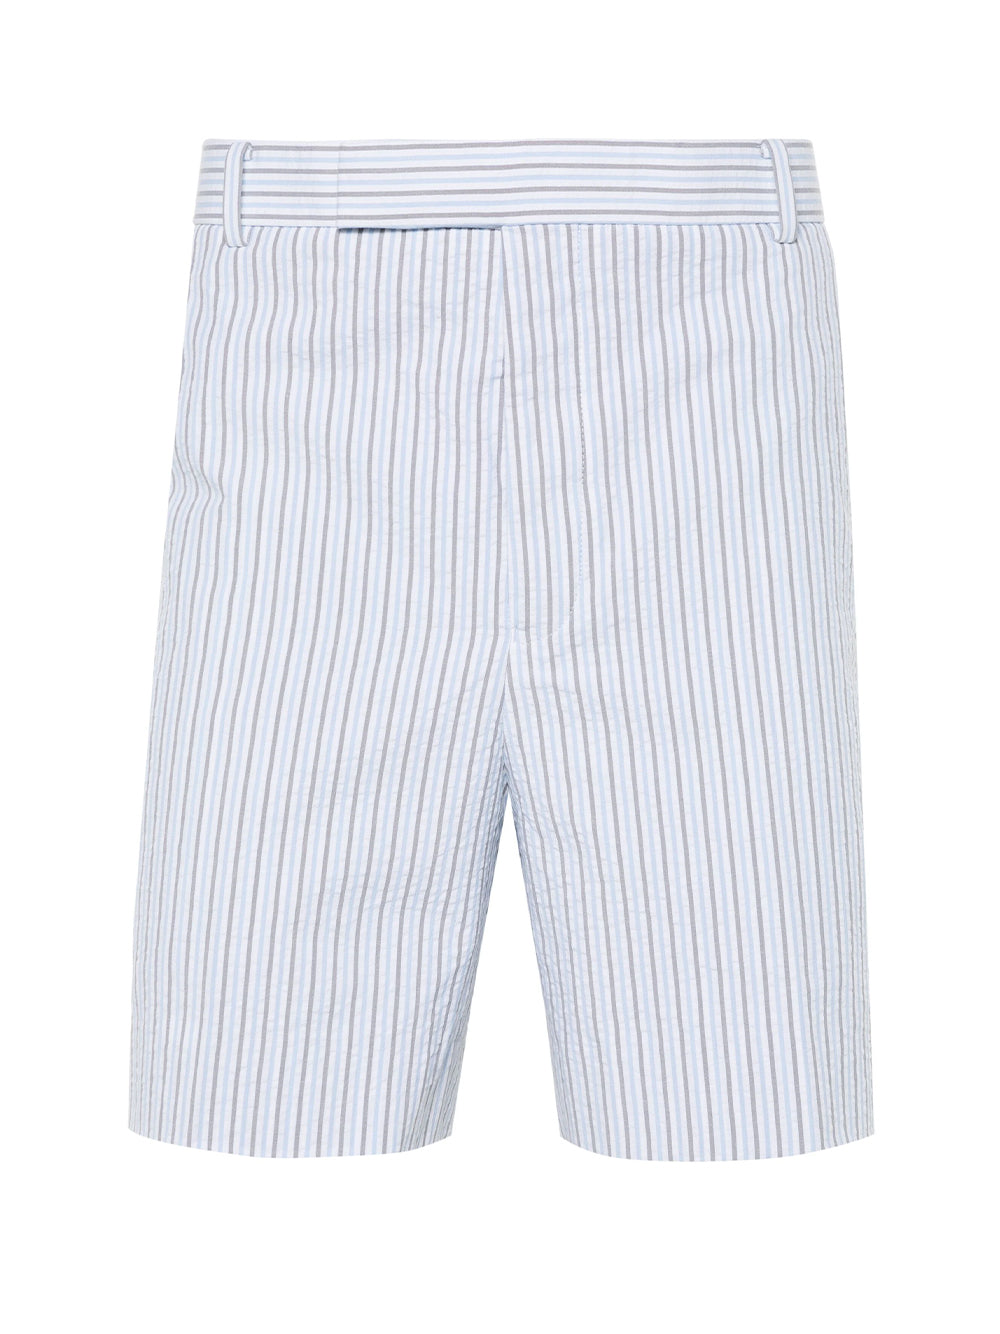 Striped Seersucker Cotton Shorts (Light Blue)